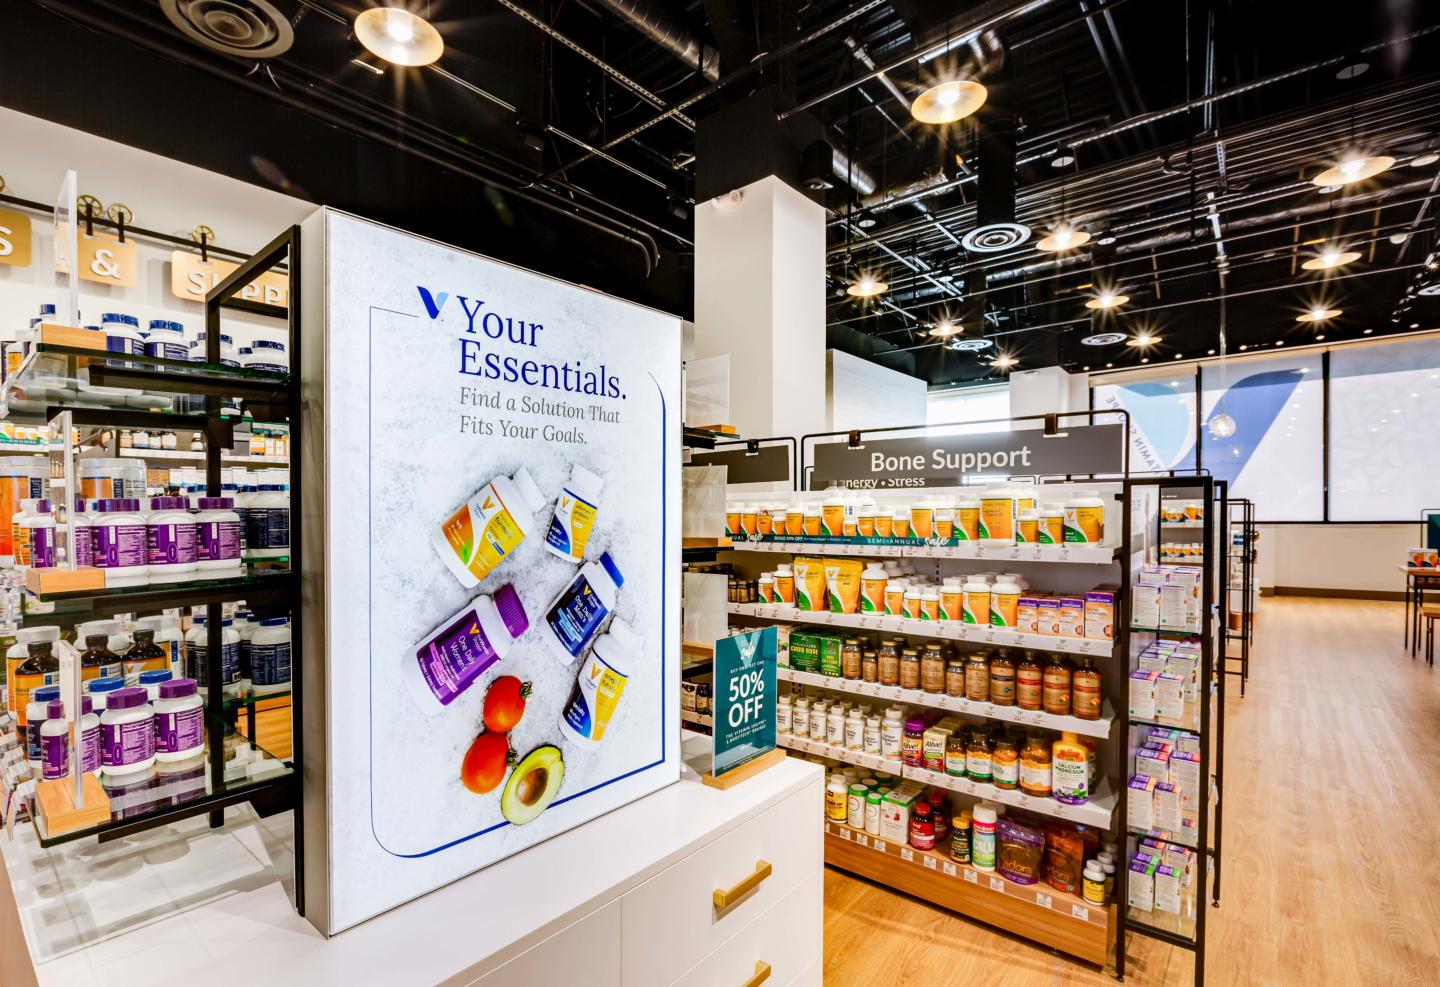 Store signage at Vitamin Shoppe